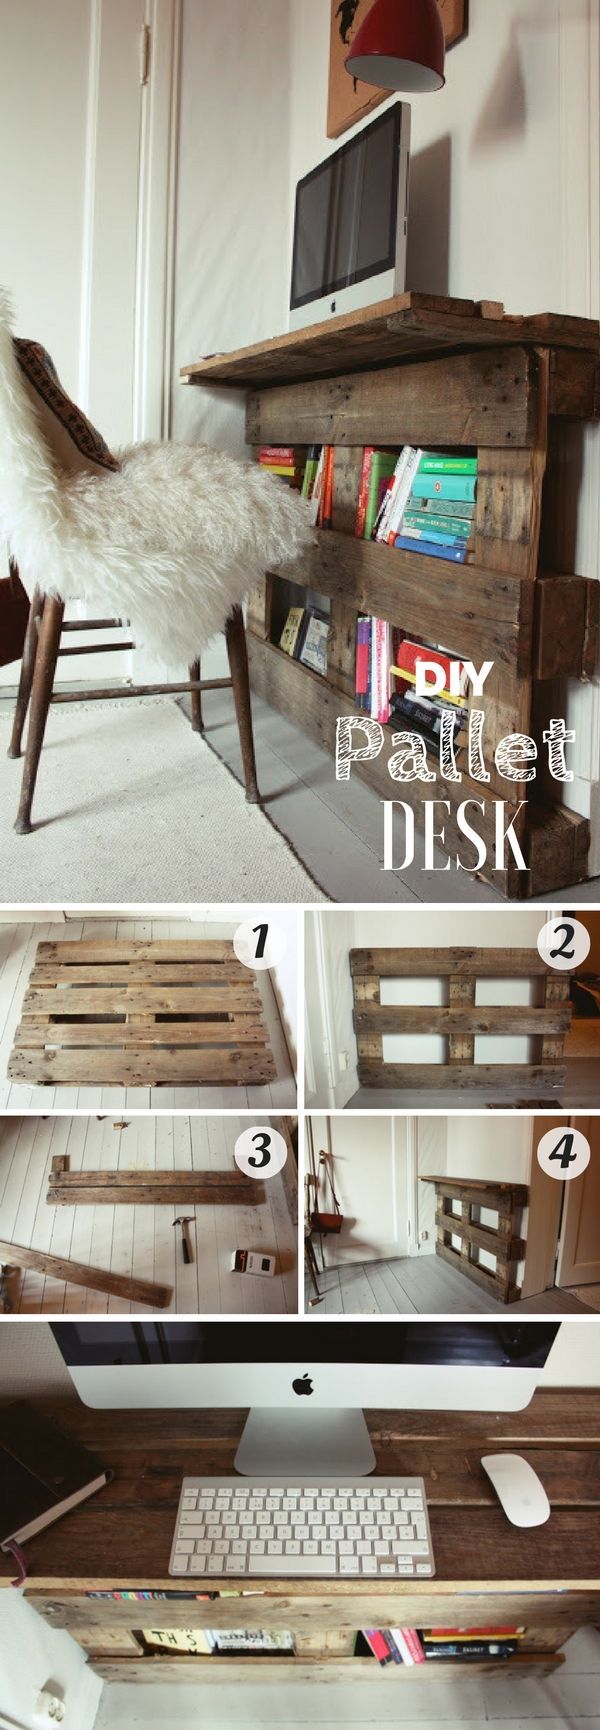 Easy tutorial for an awesome DIY pallet desk @Industry Standard Design